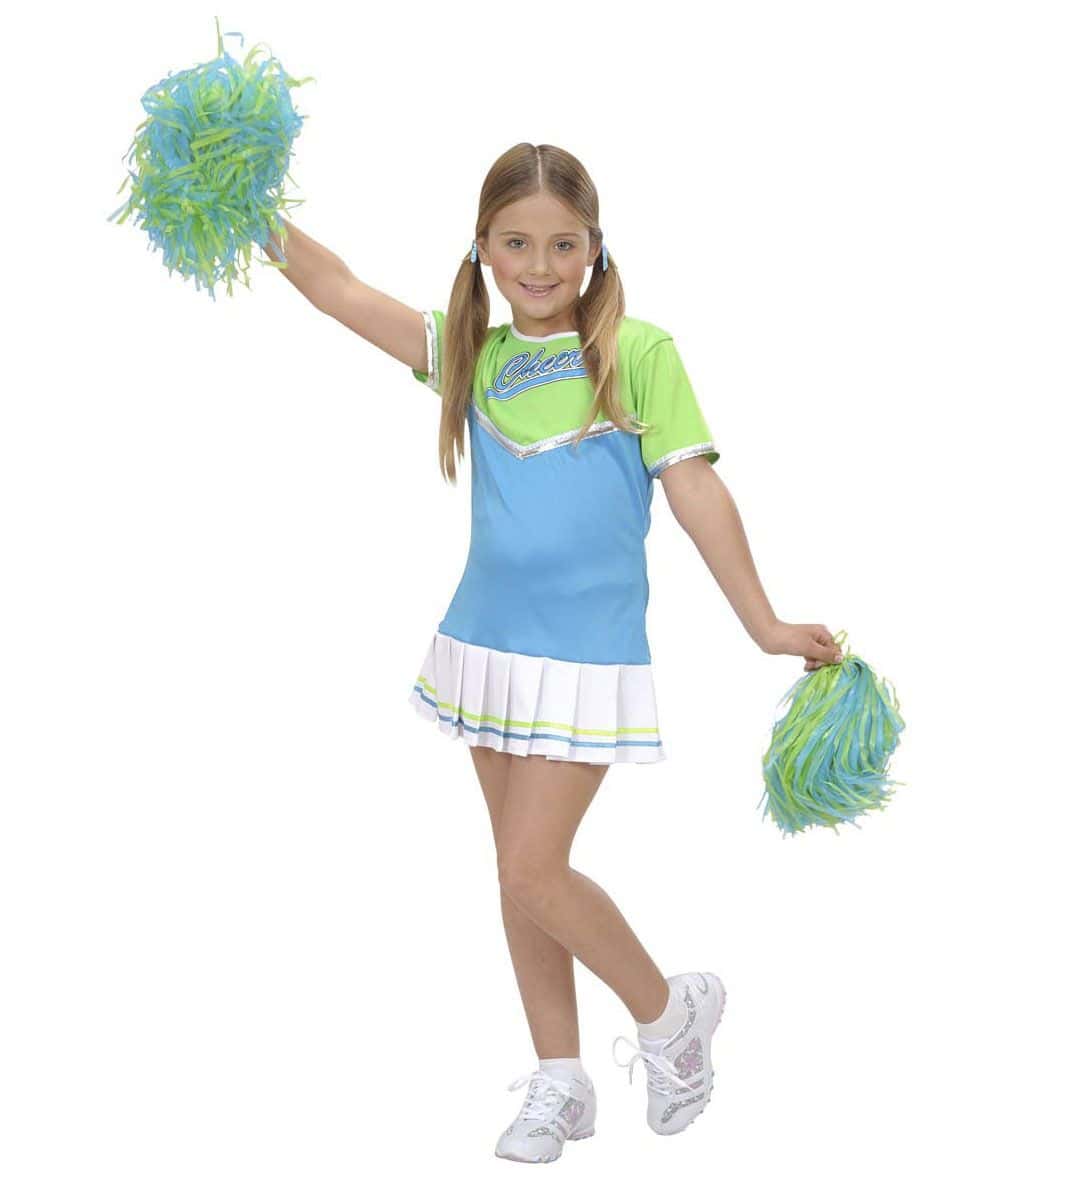 Costume de Pom-Pom Girl Enfant - Bleu/Vert 5-6 ans - Jour de Fête